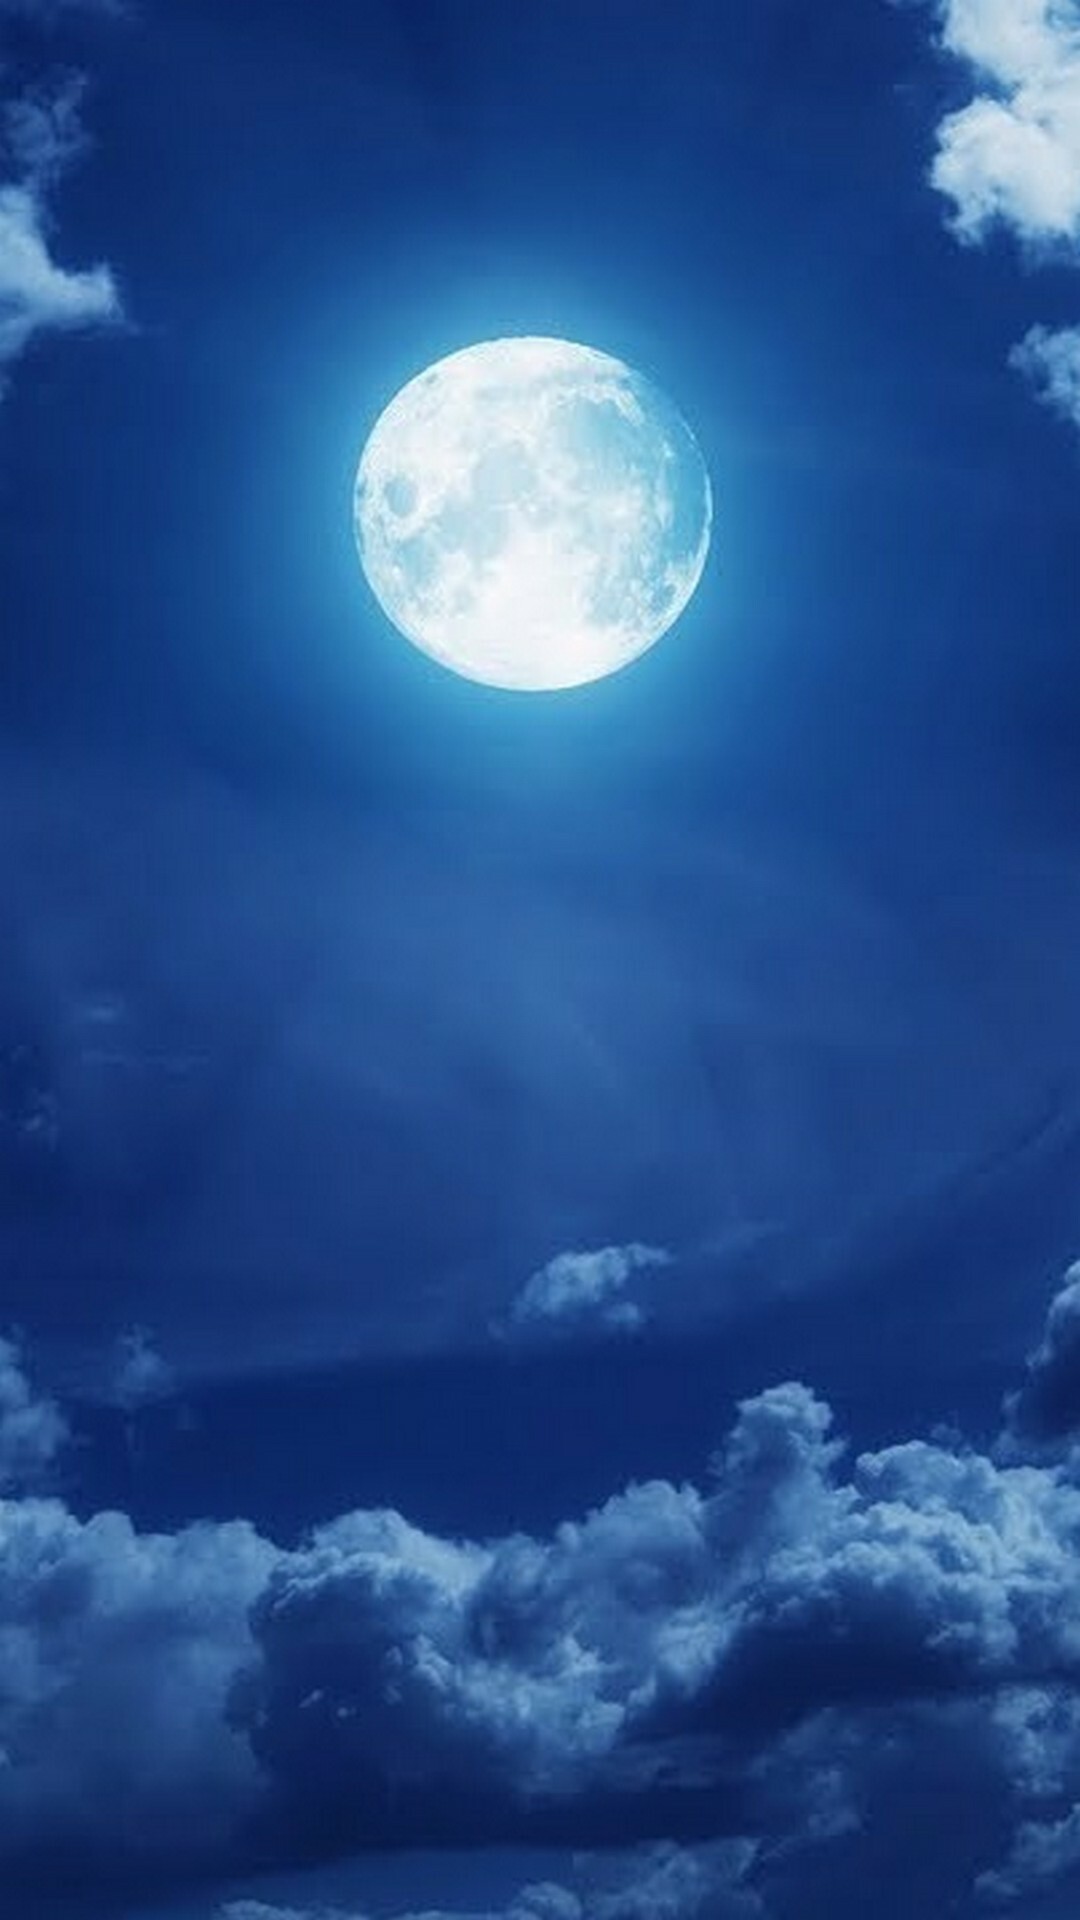 Moonlight: Full Moon, The lunar phase, Visual phenomena. 1080x1920 Full HD Background.